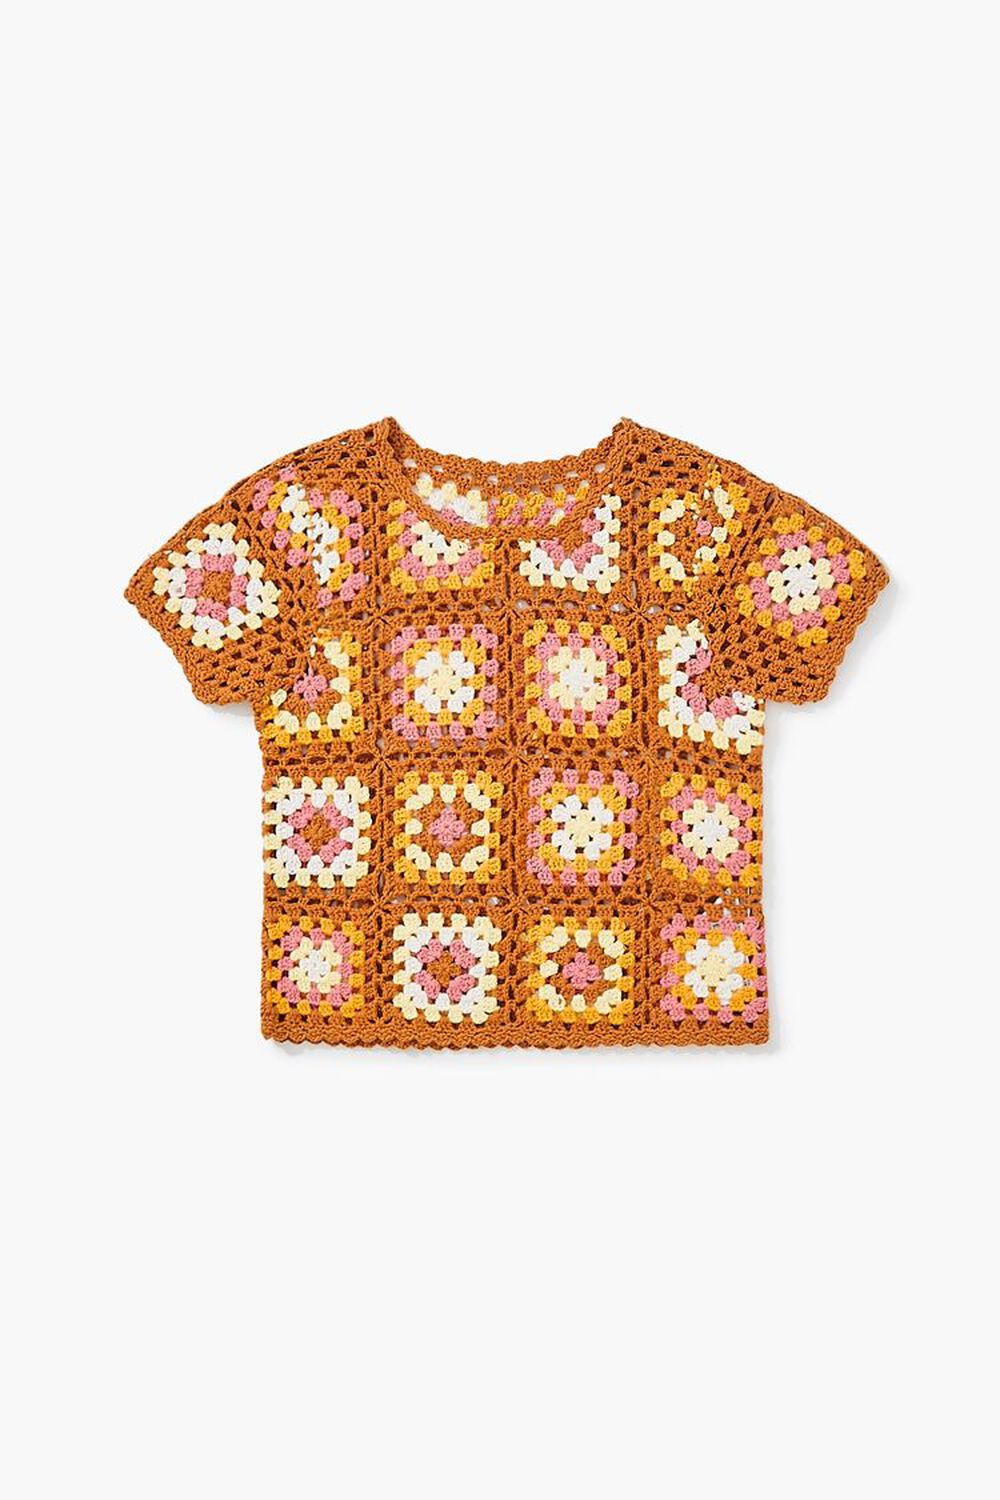 BROWN/MULTI Girls Granny Square Crochet Top (Kids), image 1